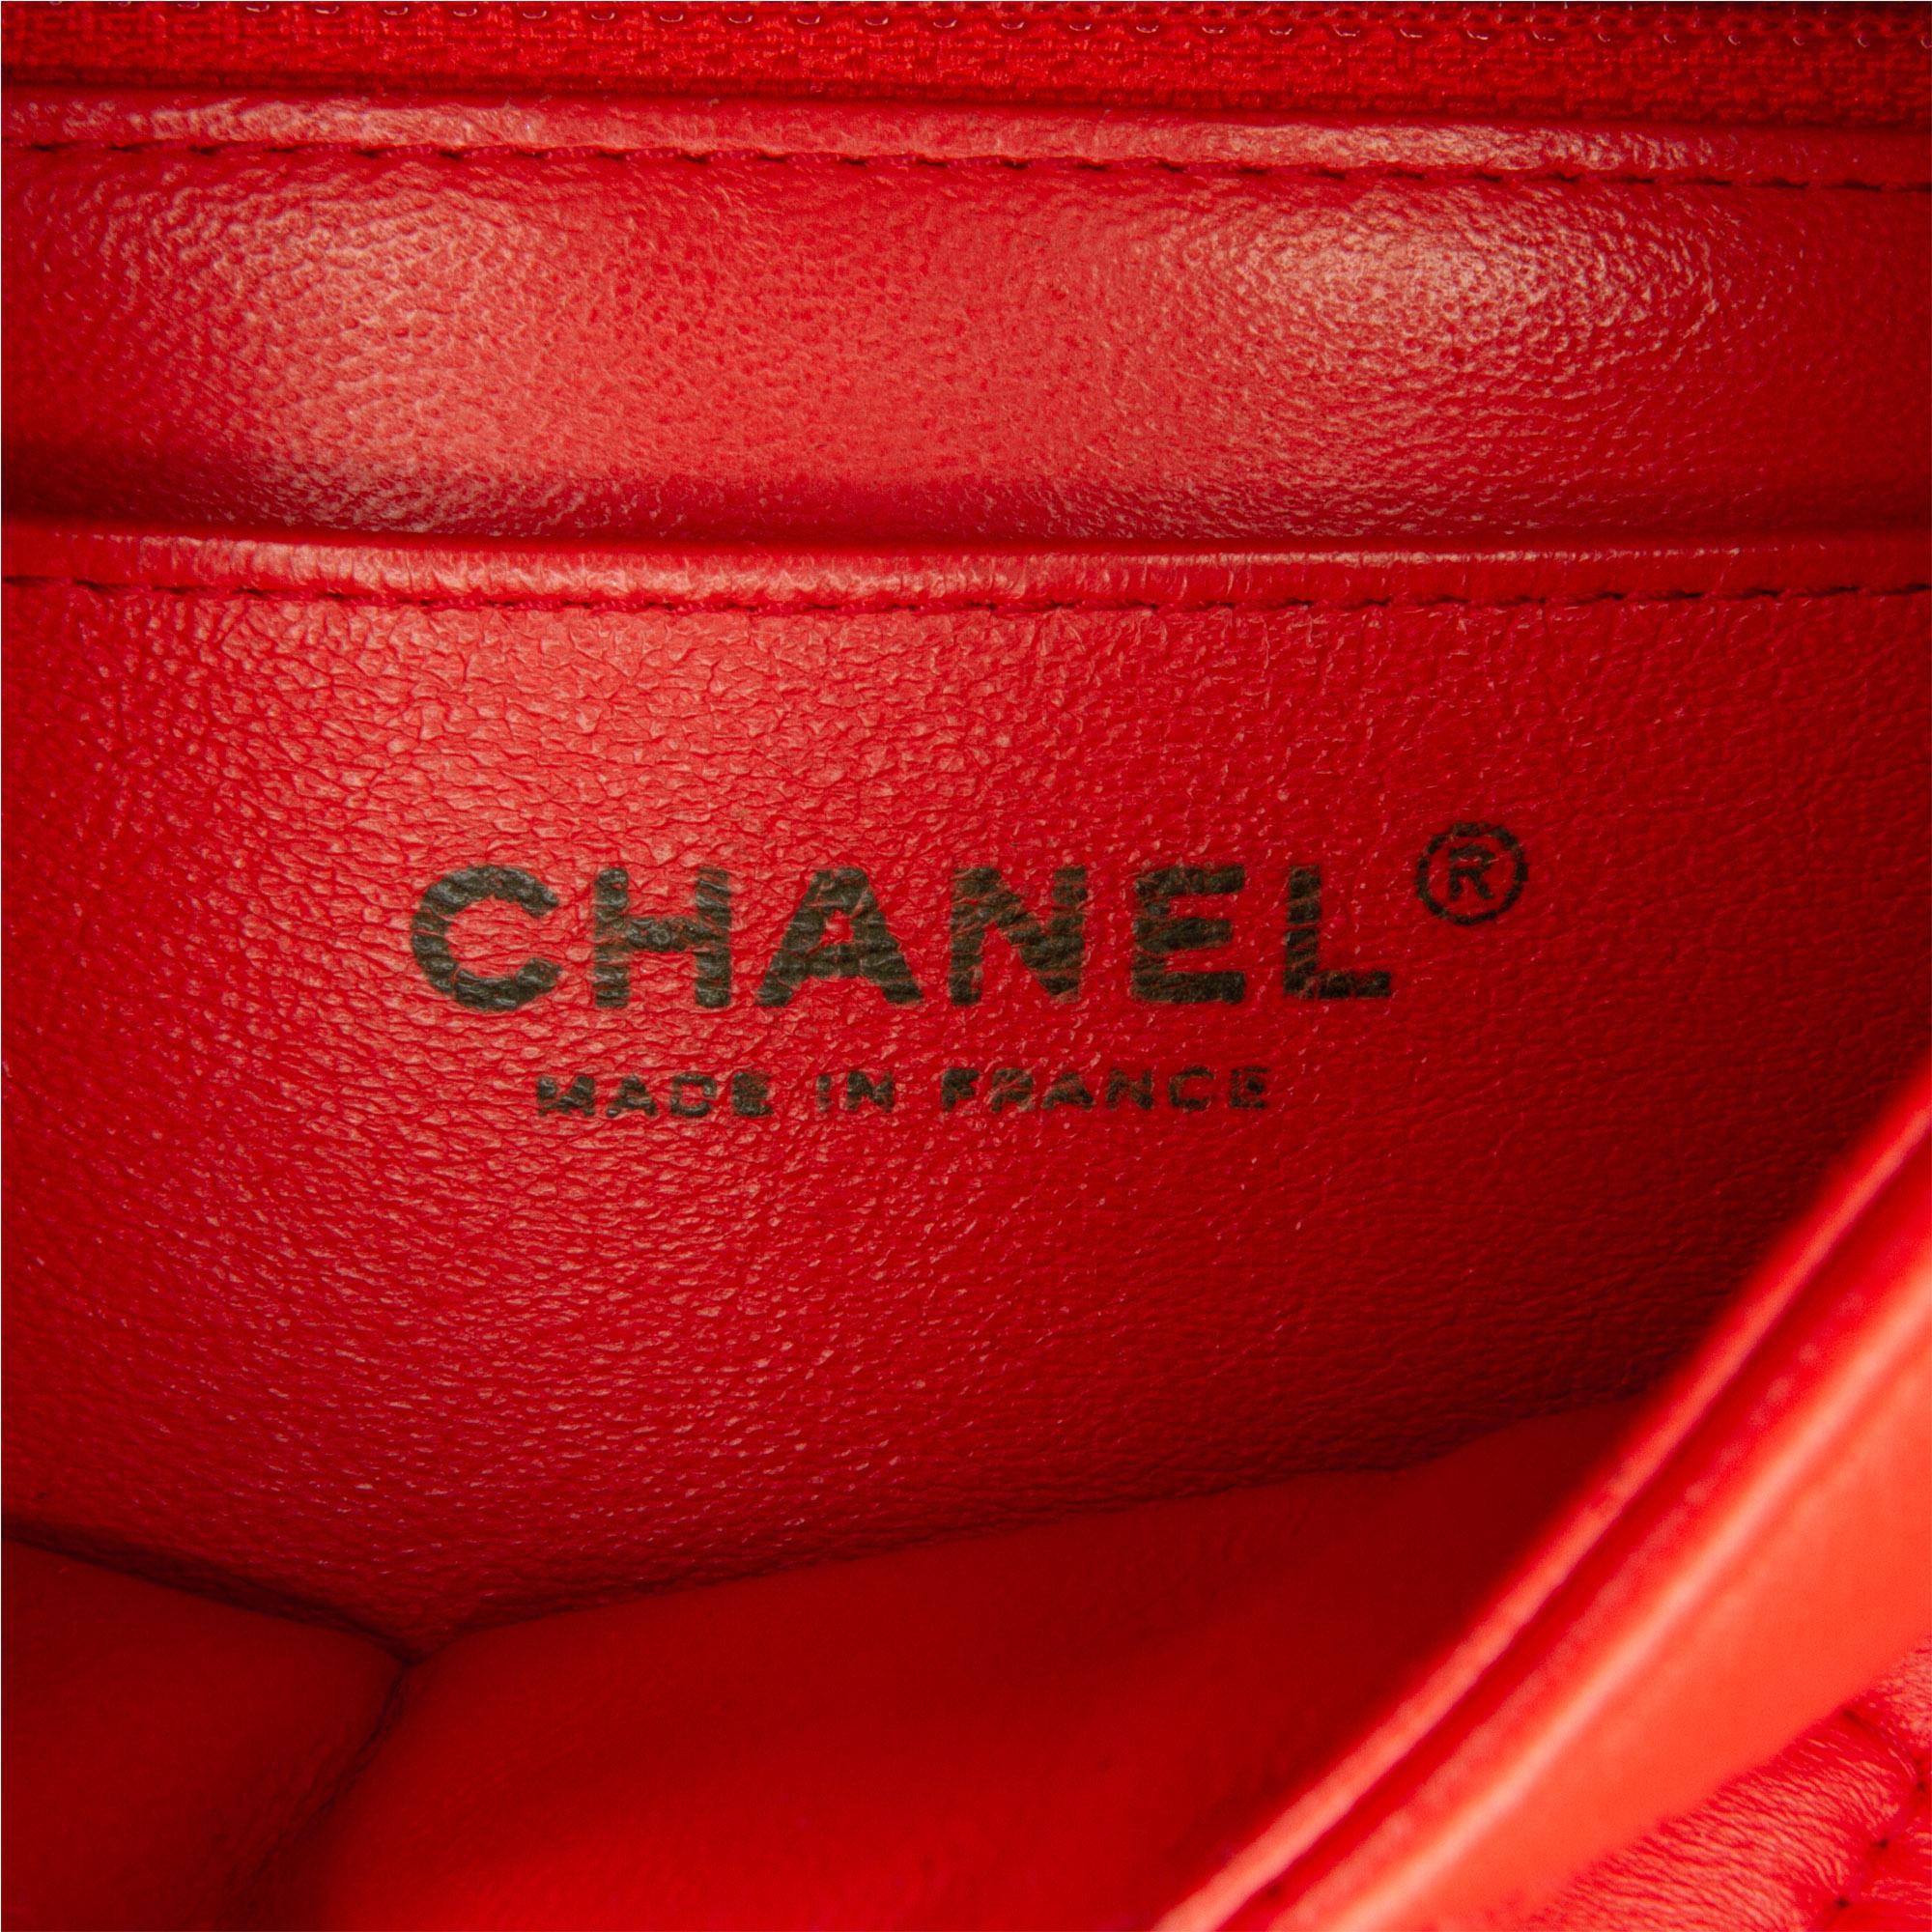 Chanel Red Mini Classic Lambskin Rectangular Single Flap